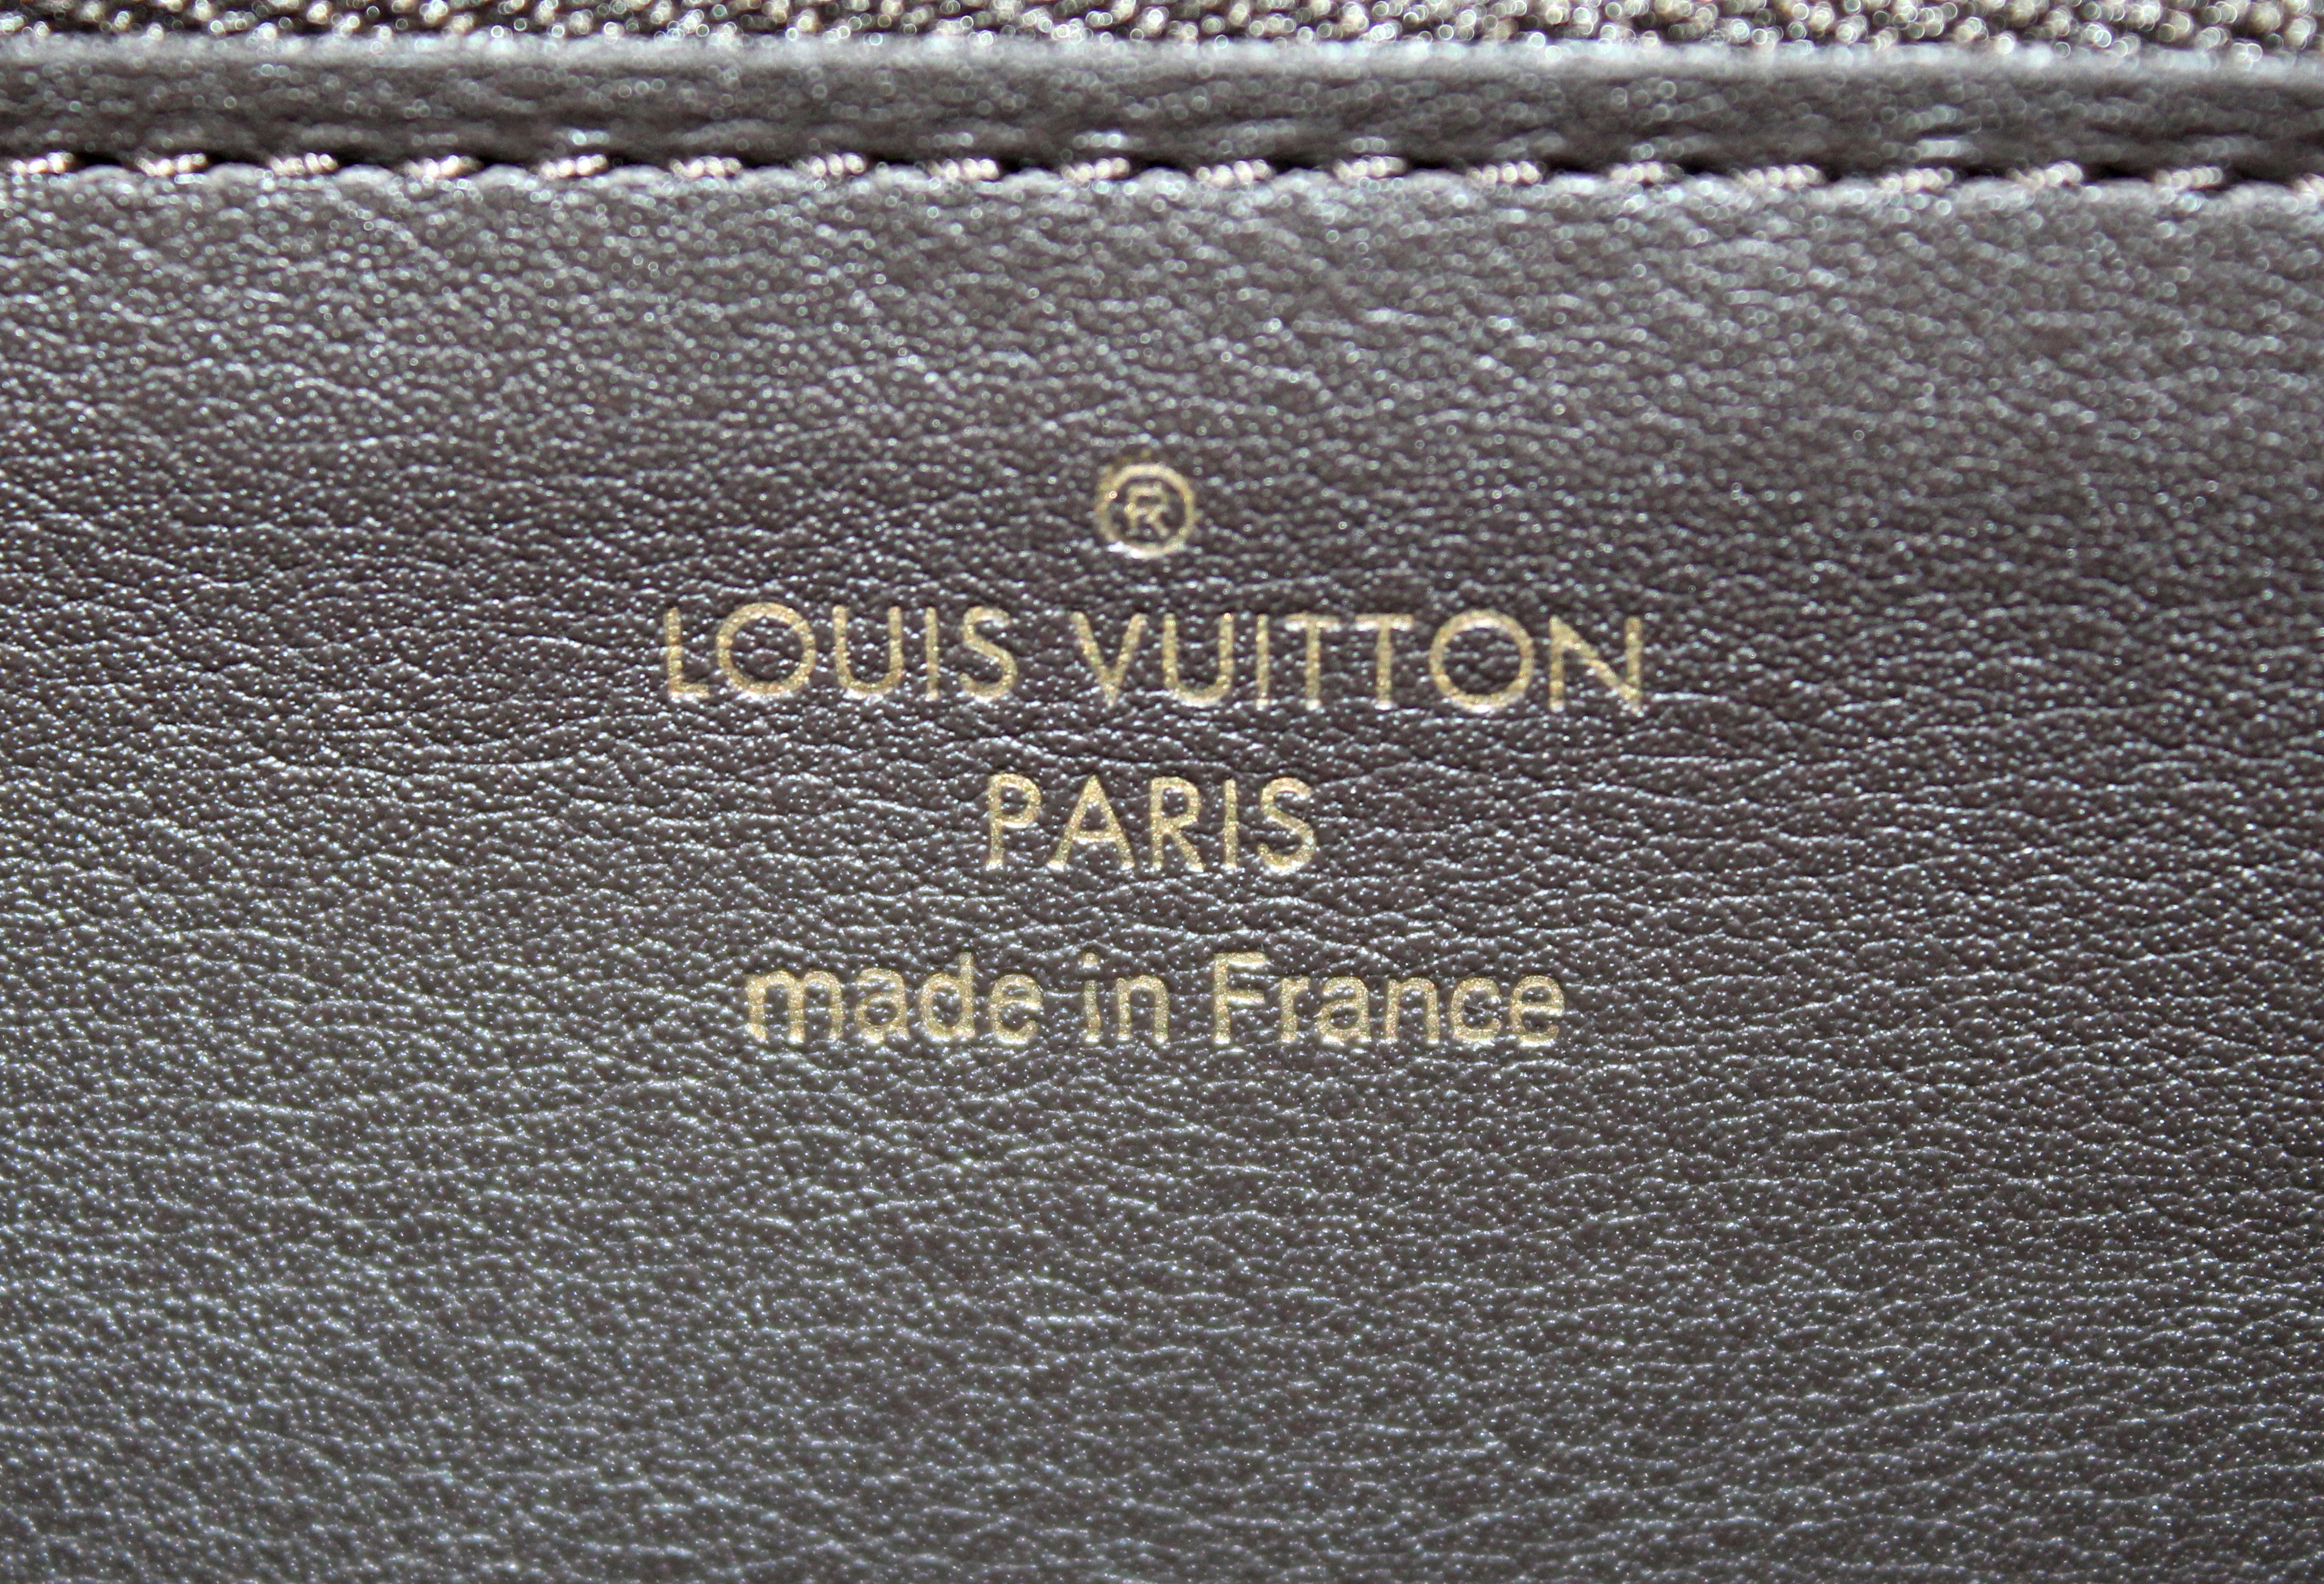 Louis Vuitton LV Vertical Wallet Pebble Taurillon